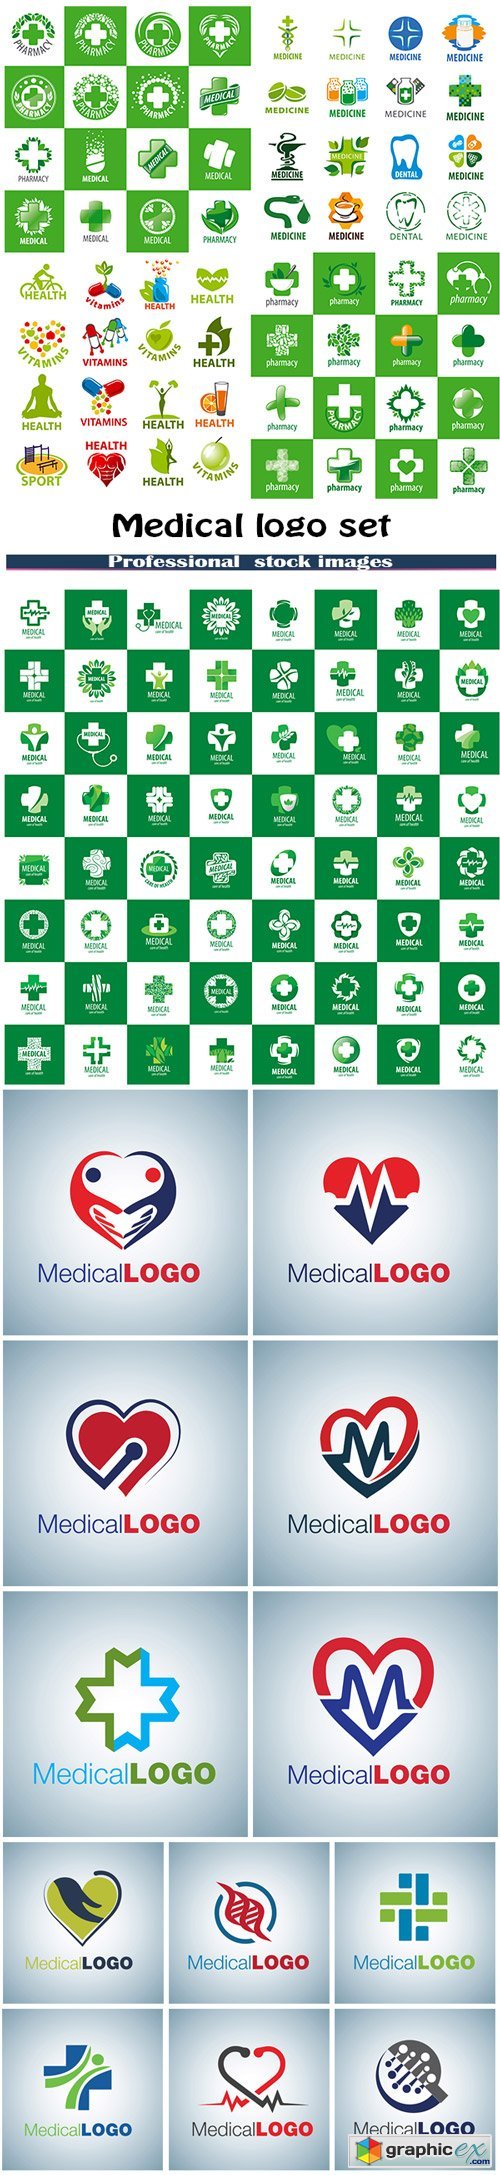 Medical logo set